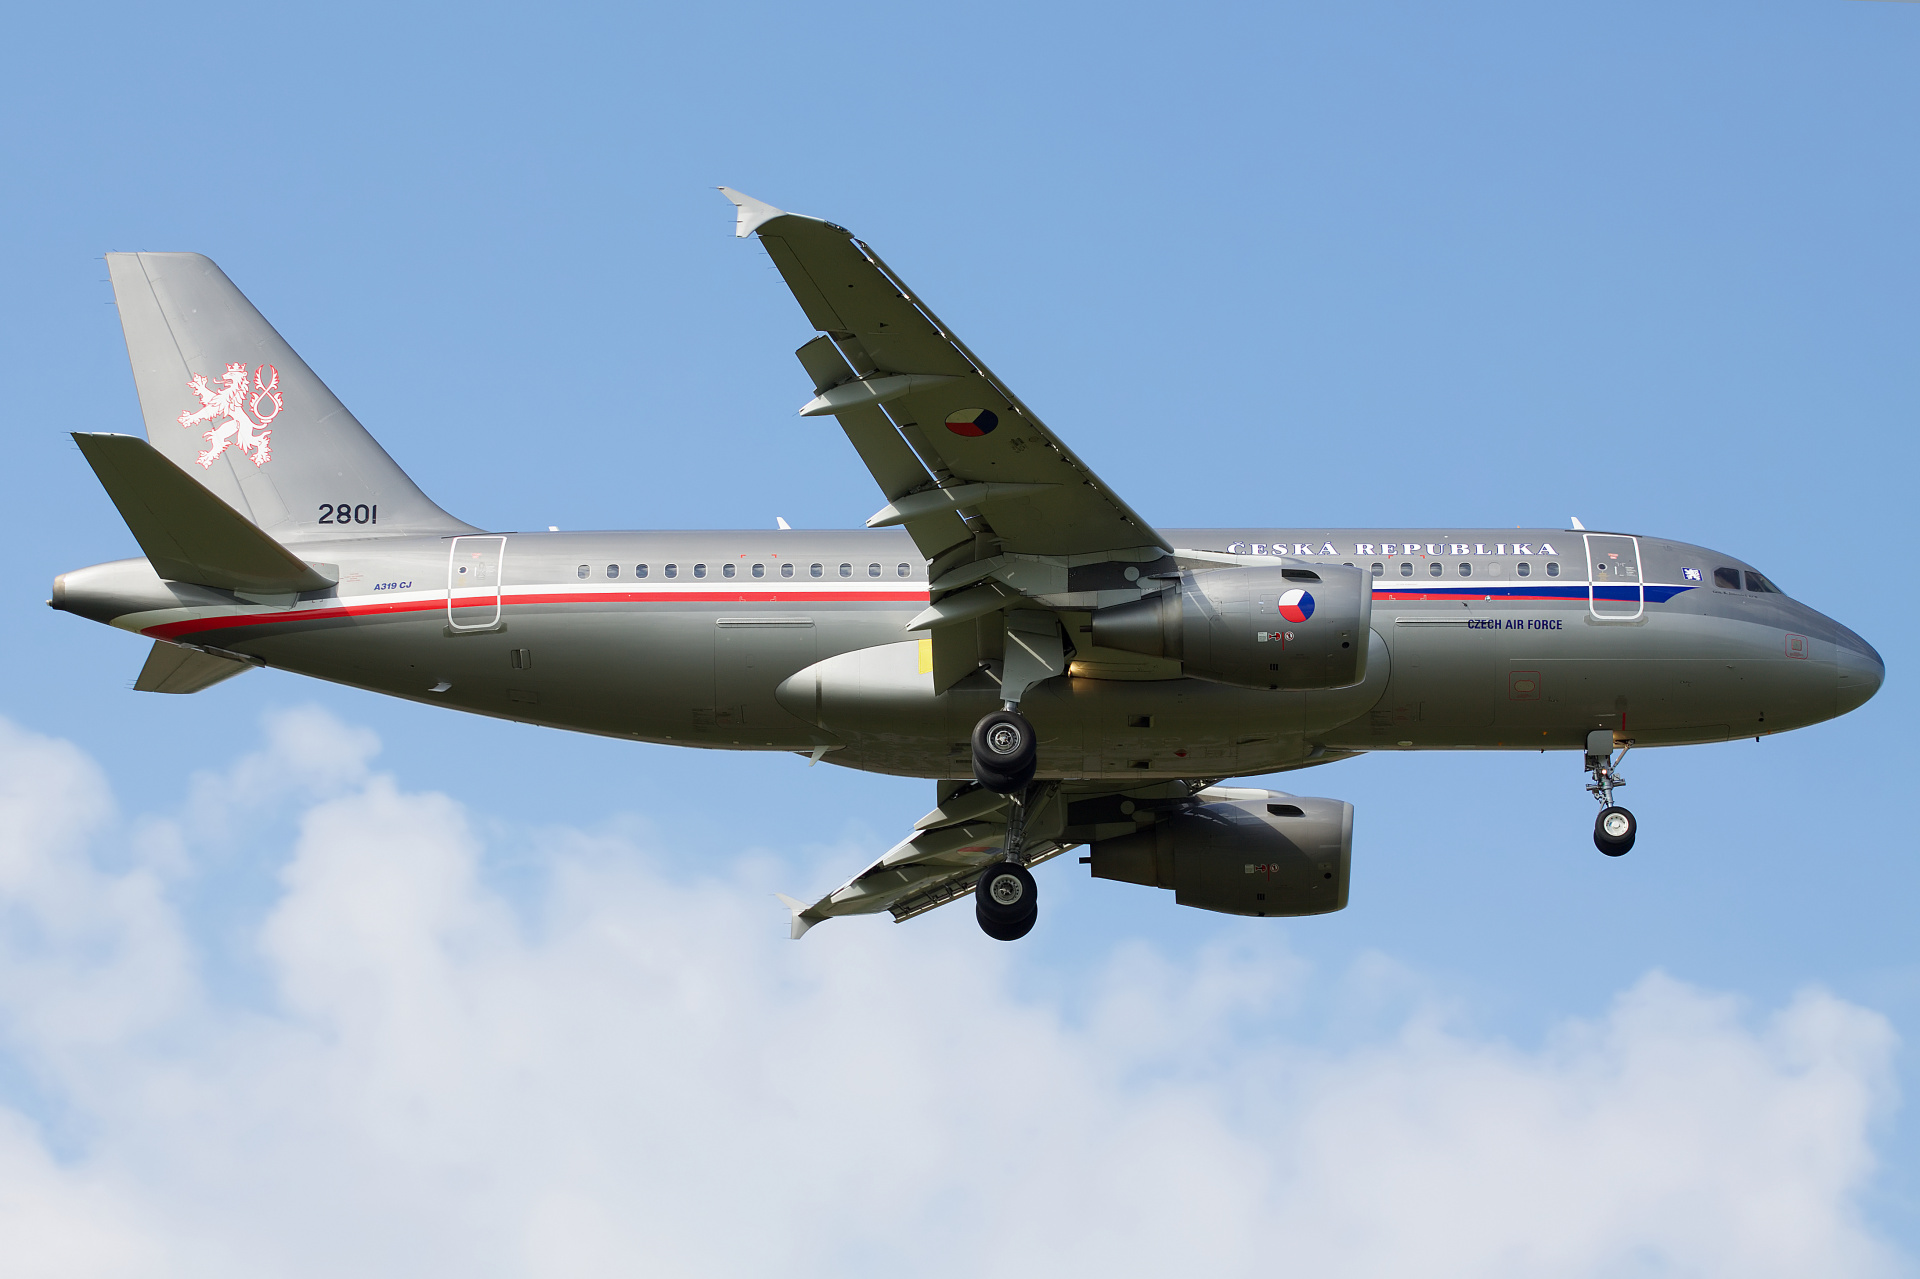 2801, Czech Air Force (Aircraft » EPWA Spotting » Airbus A319-100 » 319CJ)